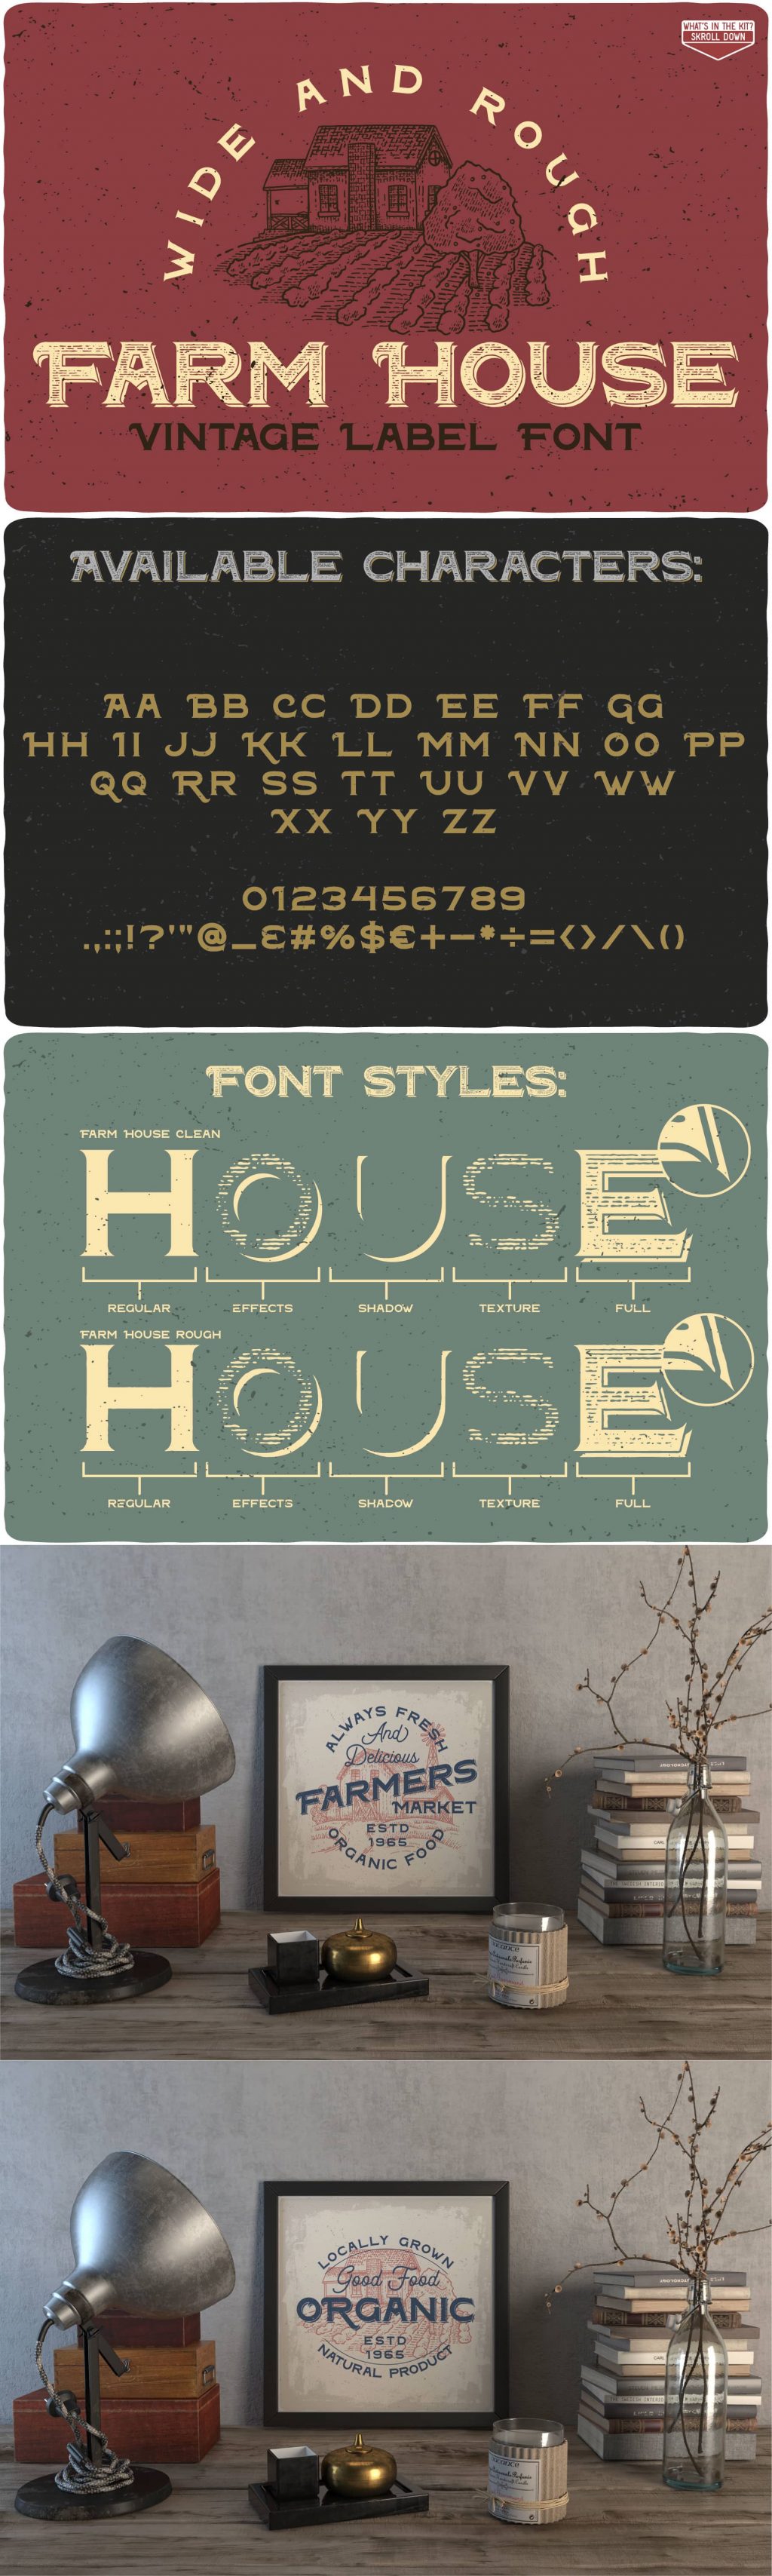 farm house font